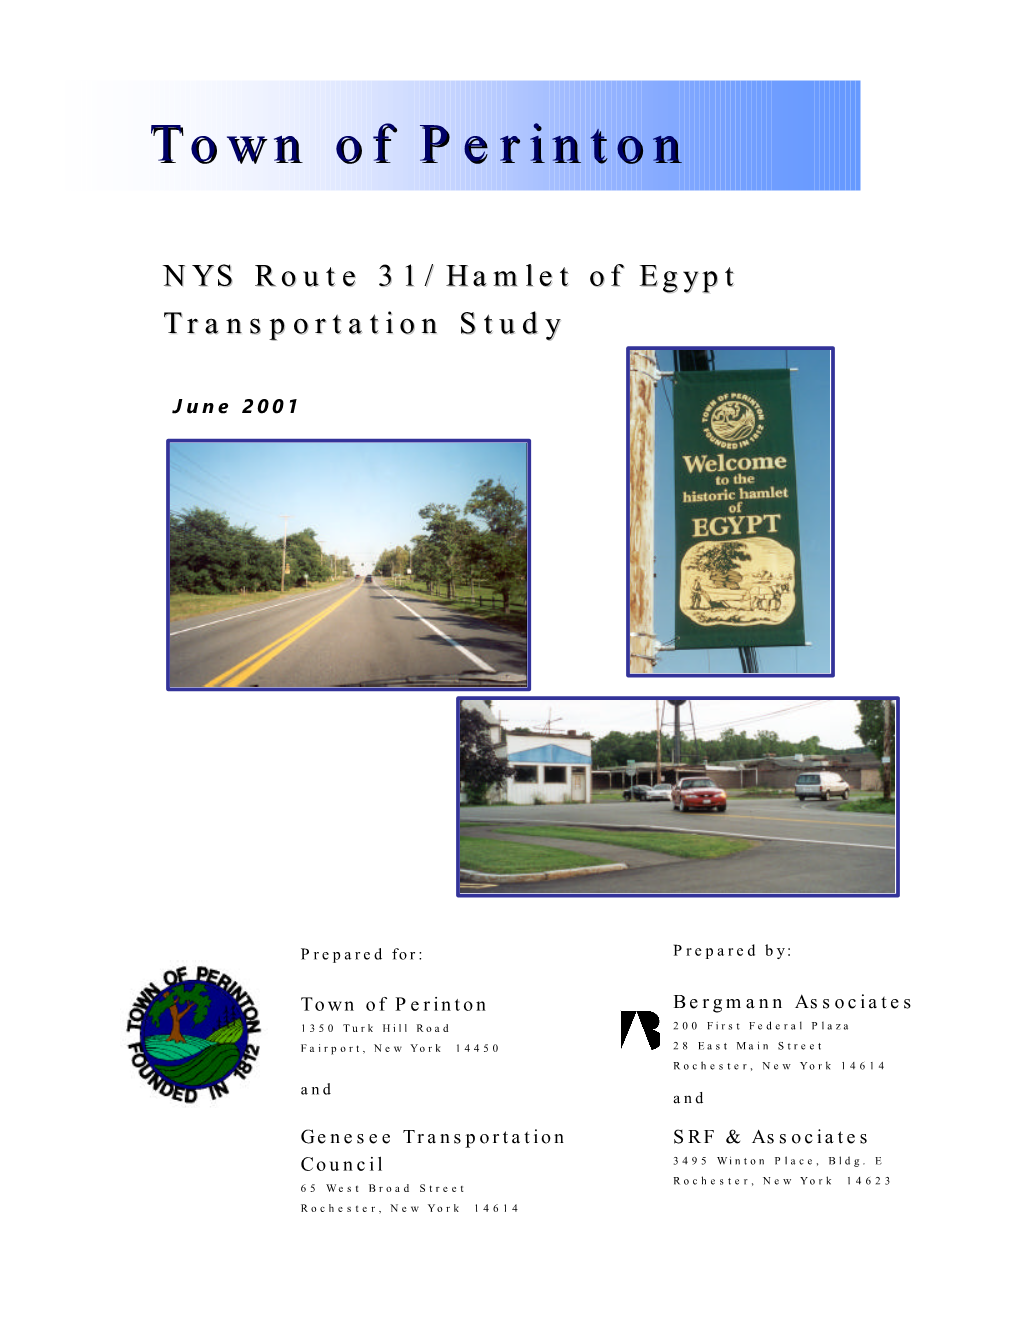 NYS Route 31/Hamlet of Egypt Transportation Study